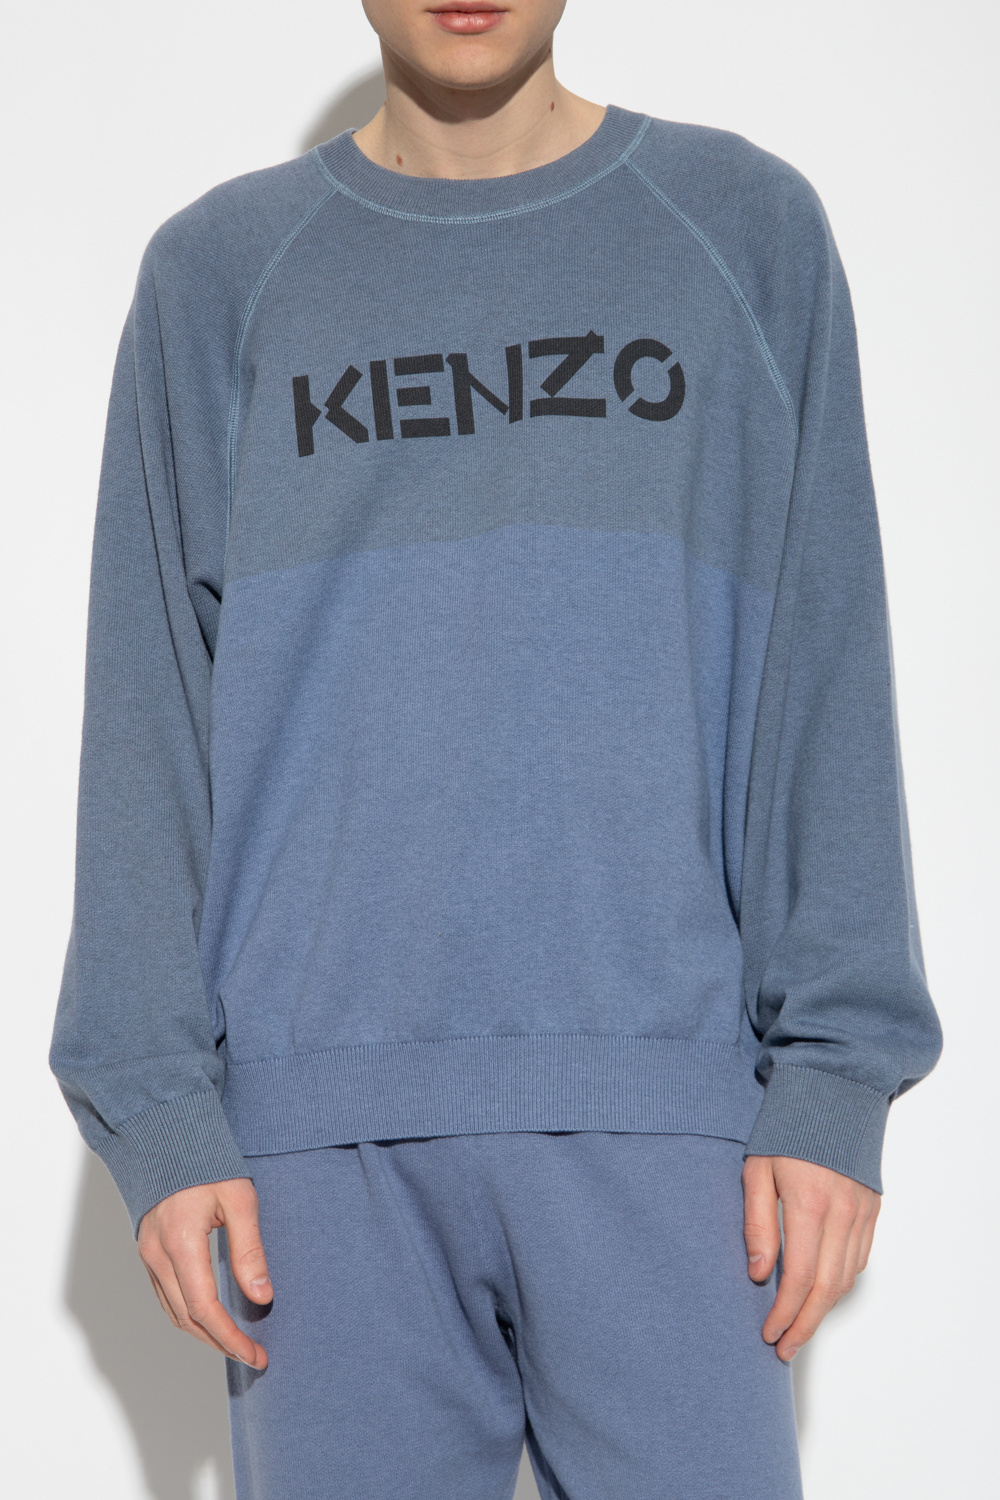 Kenzo Sweater with logo | Men's Clothing | IetpShops